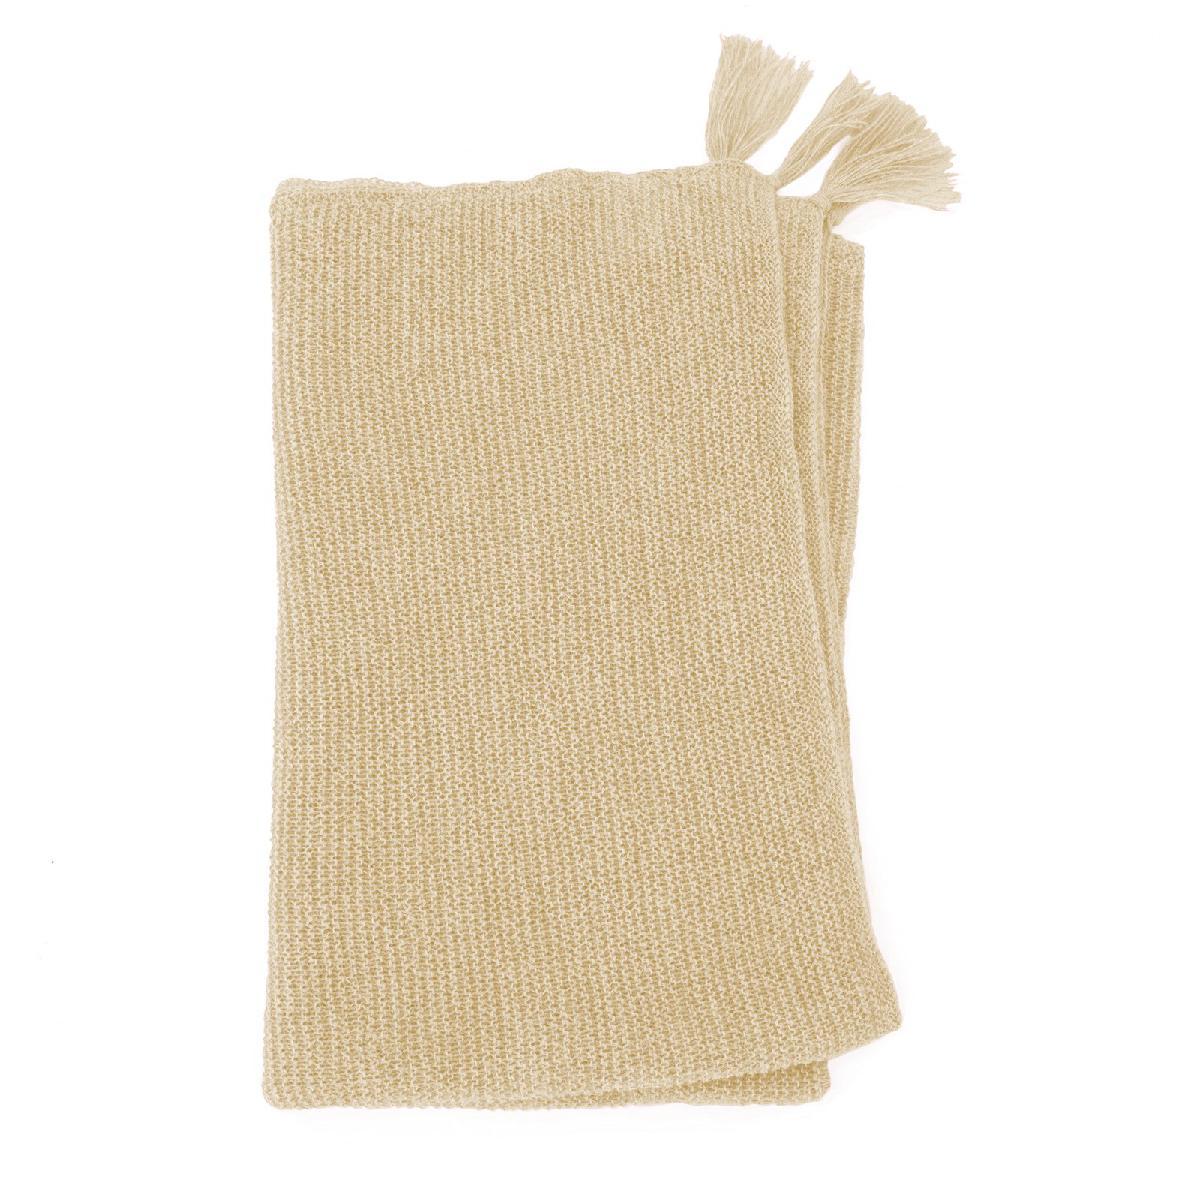 Blabla | baby alpaca blanket | oatmeal - folded